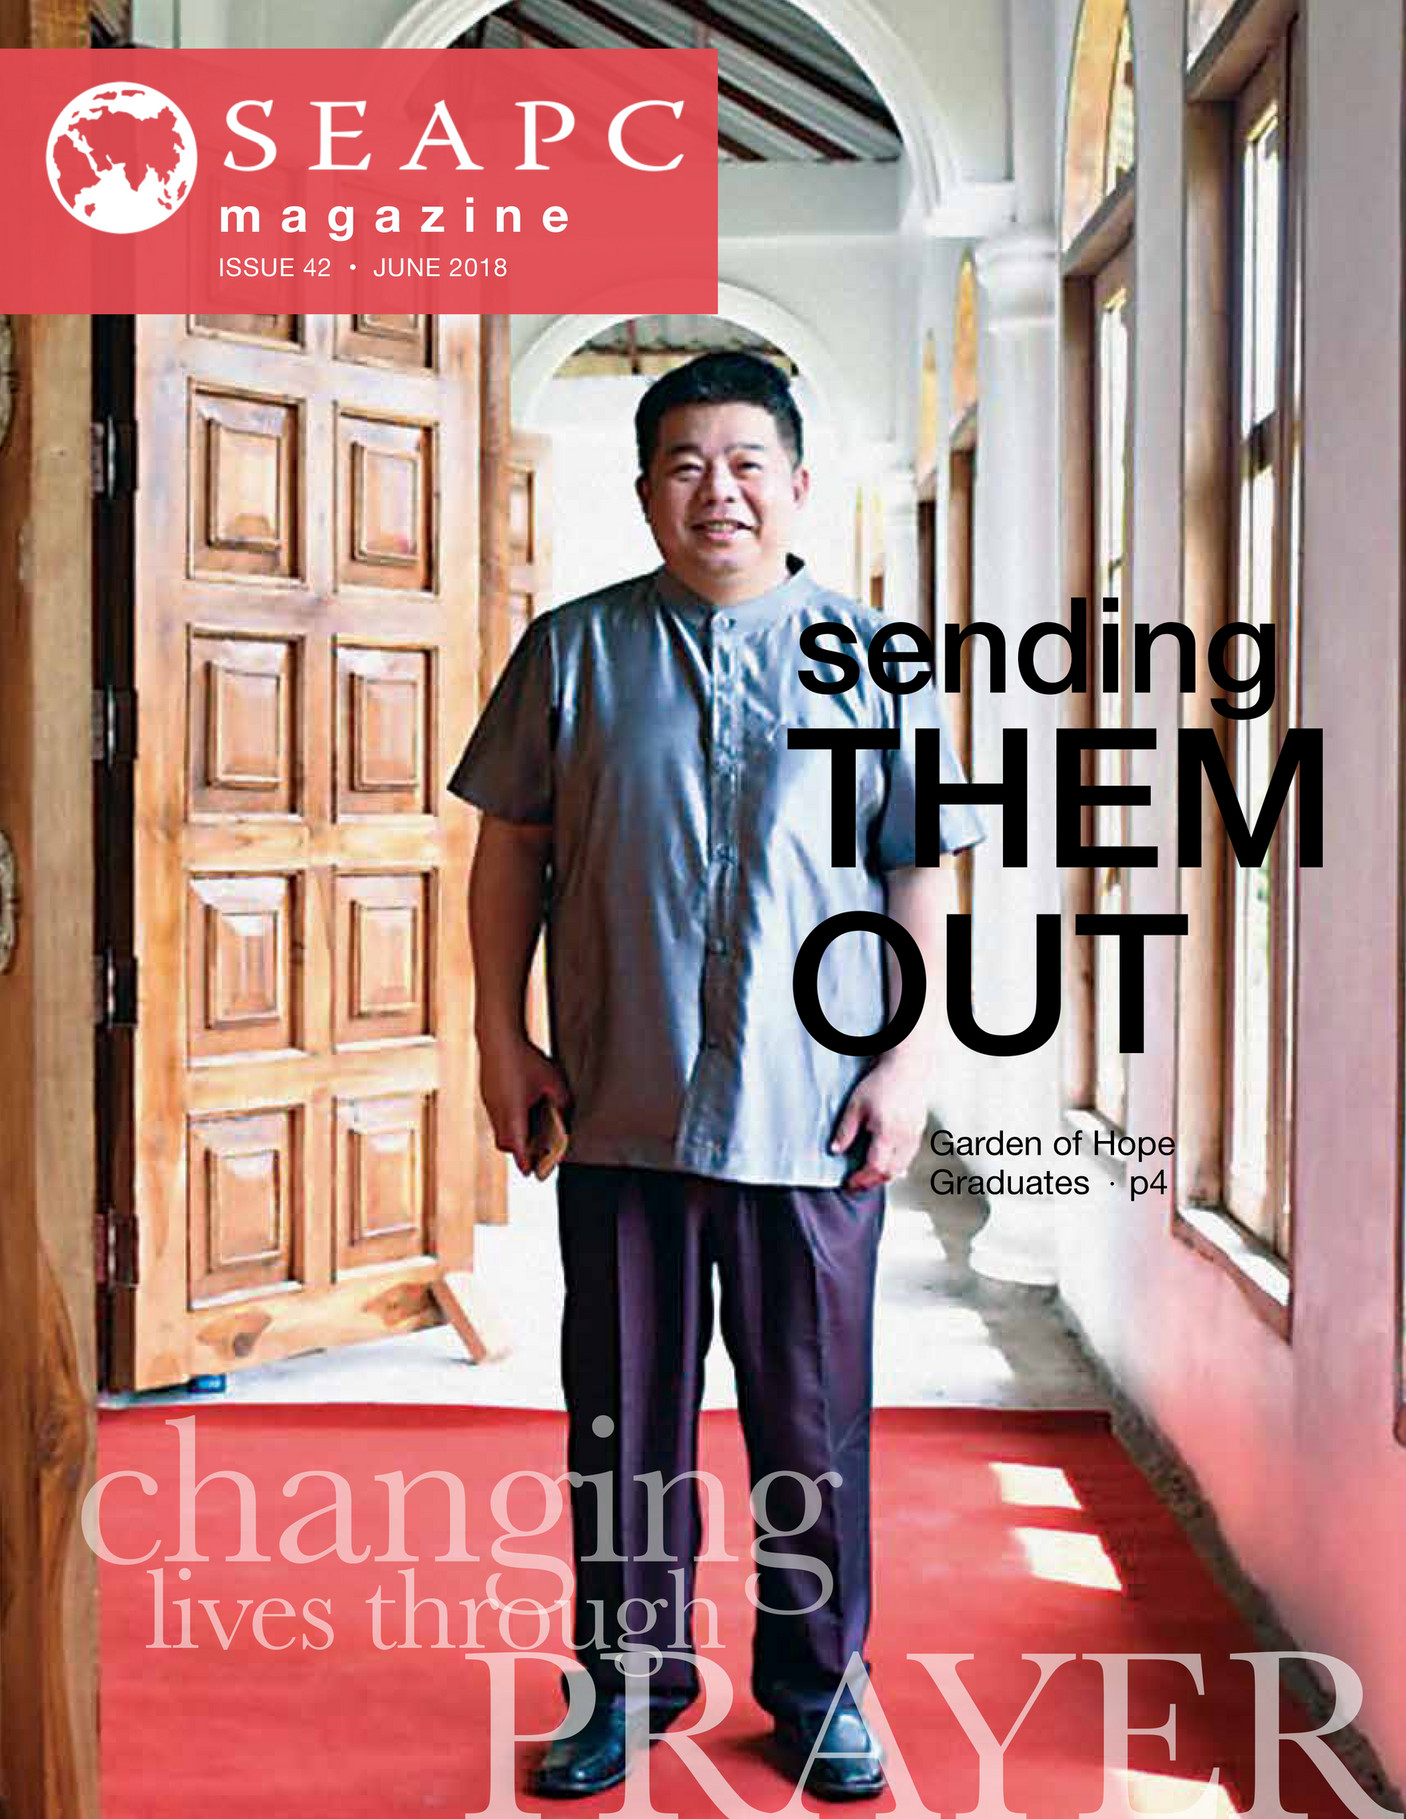 south-east-asia-prayer-center-seapc-magazine-june-2018-issue-42